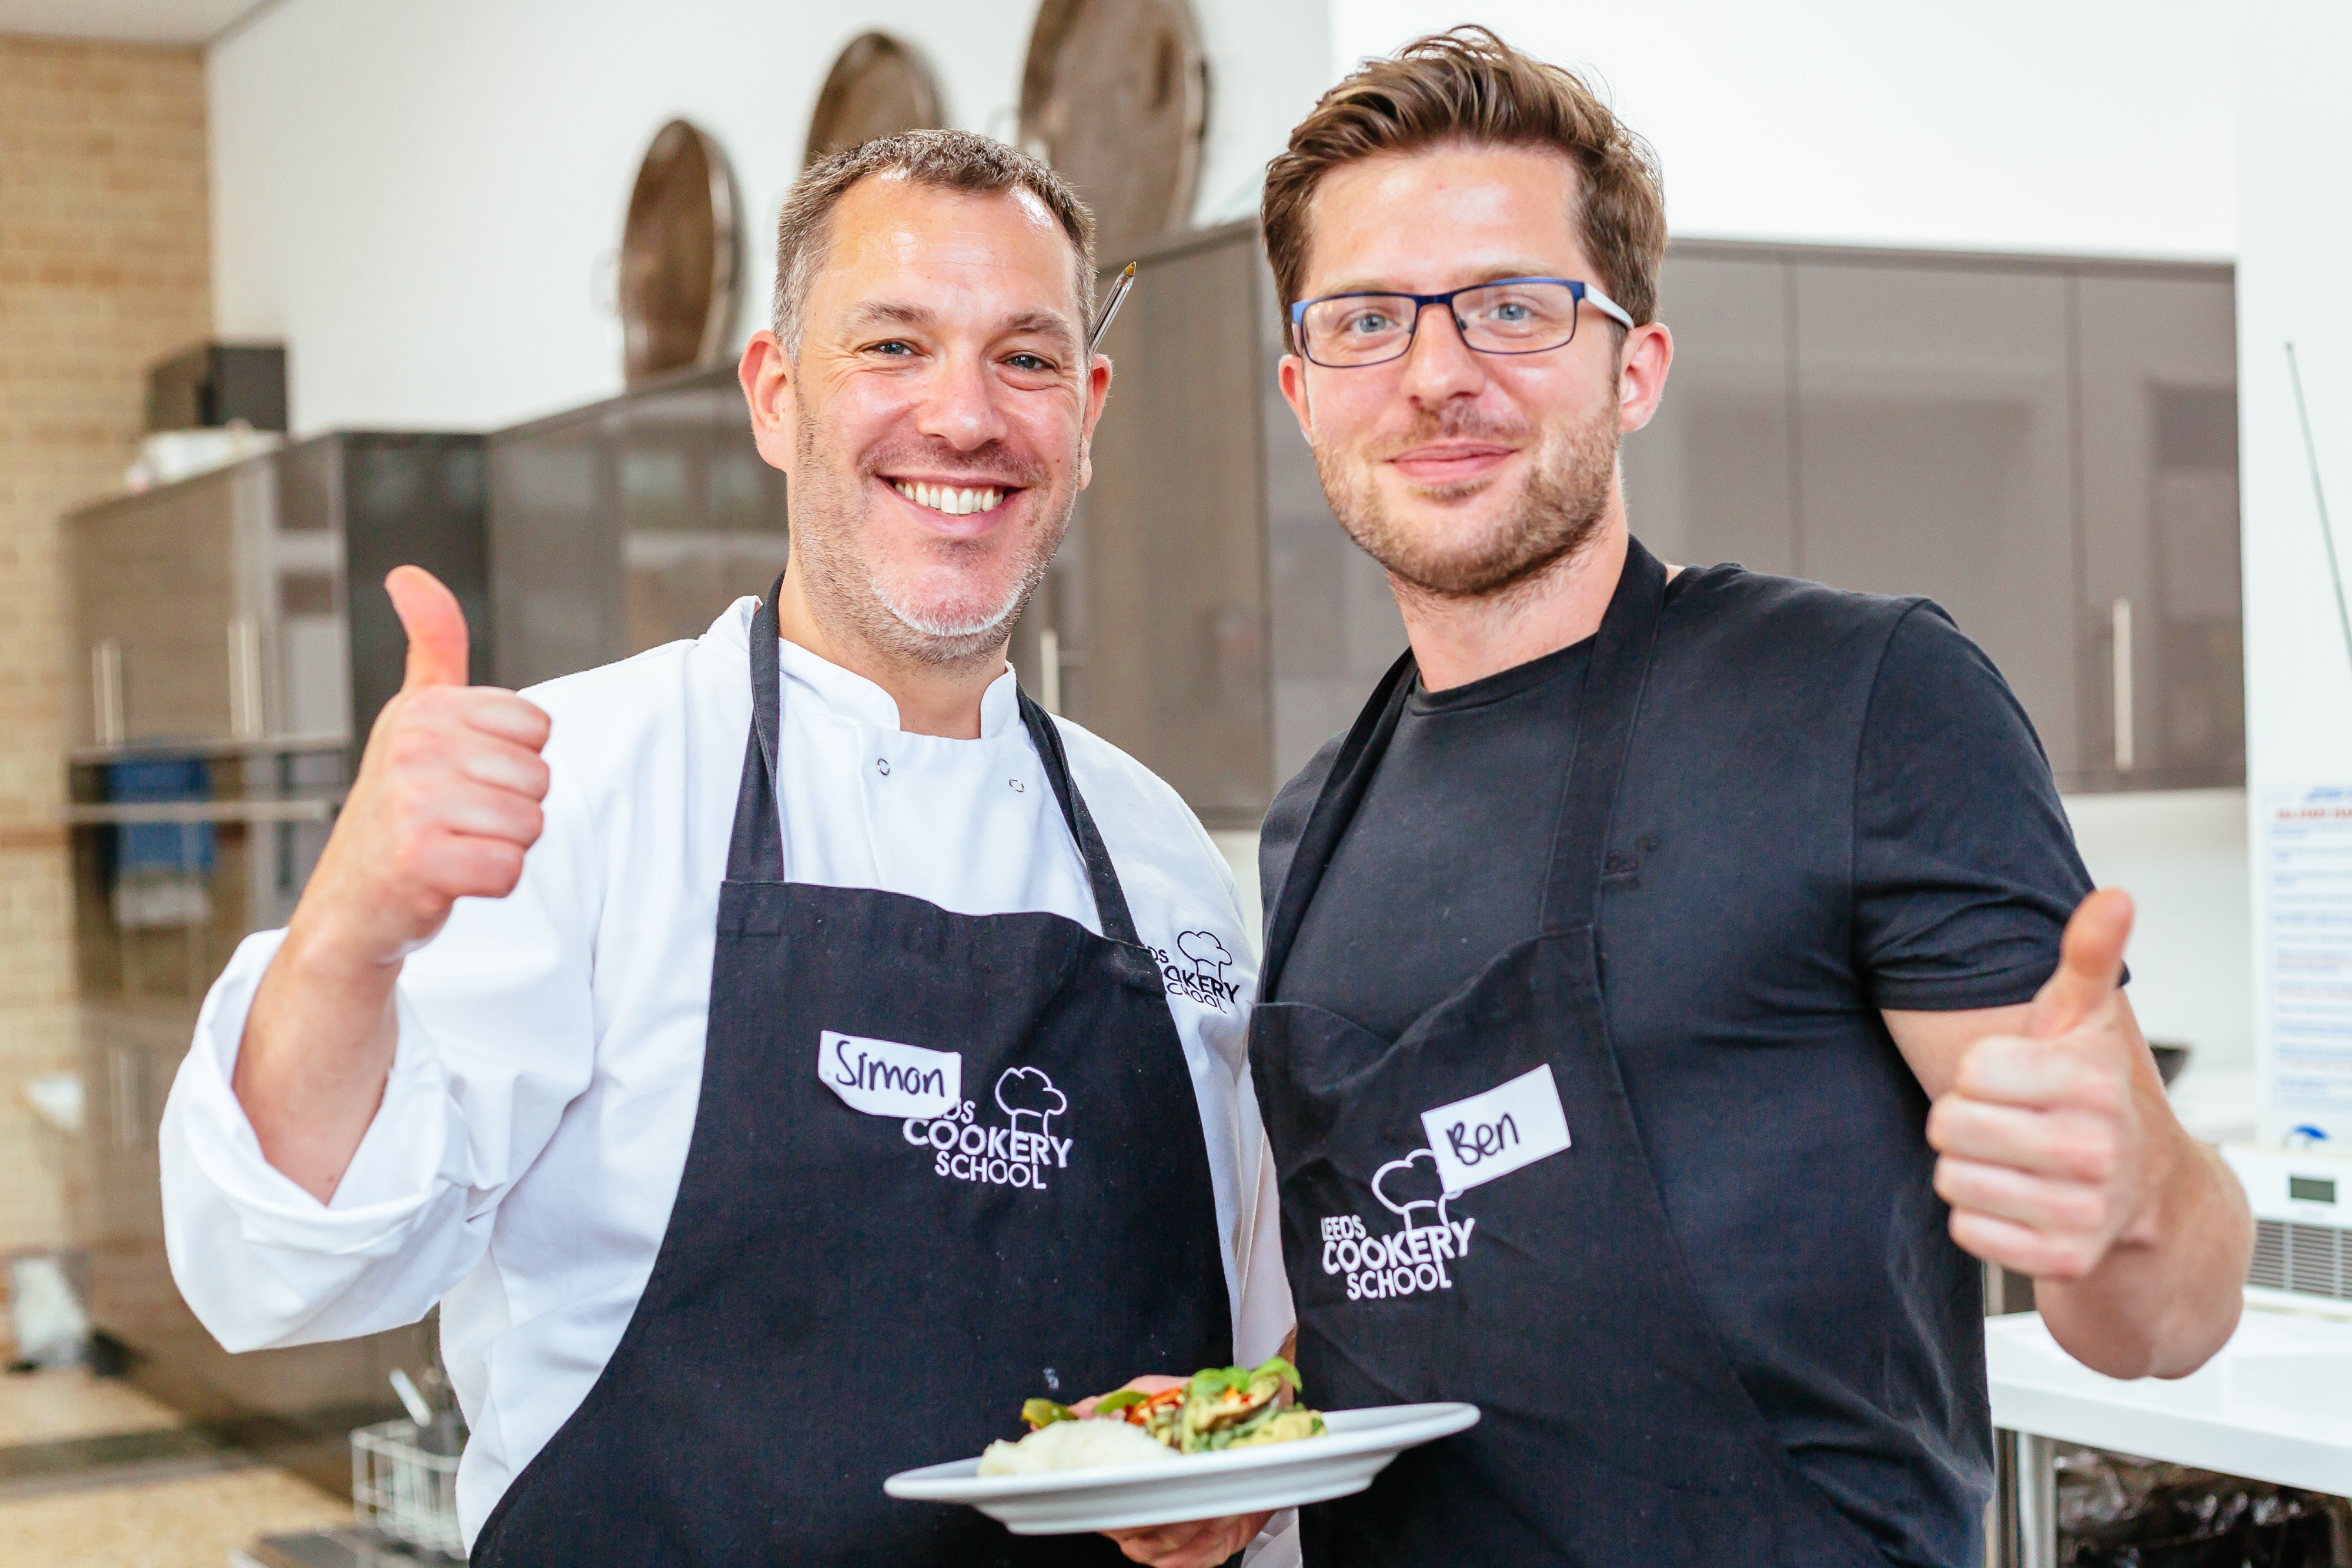 Meet Simon - Food Project & Leeds Cookery School Manager